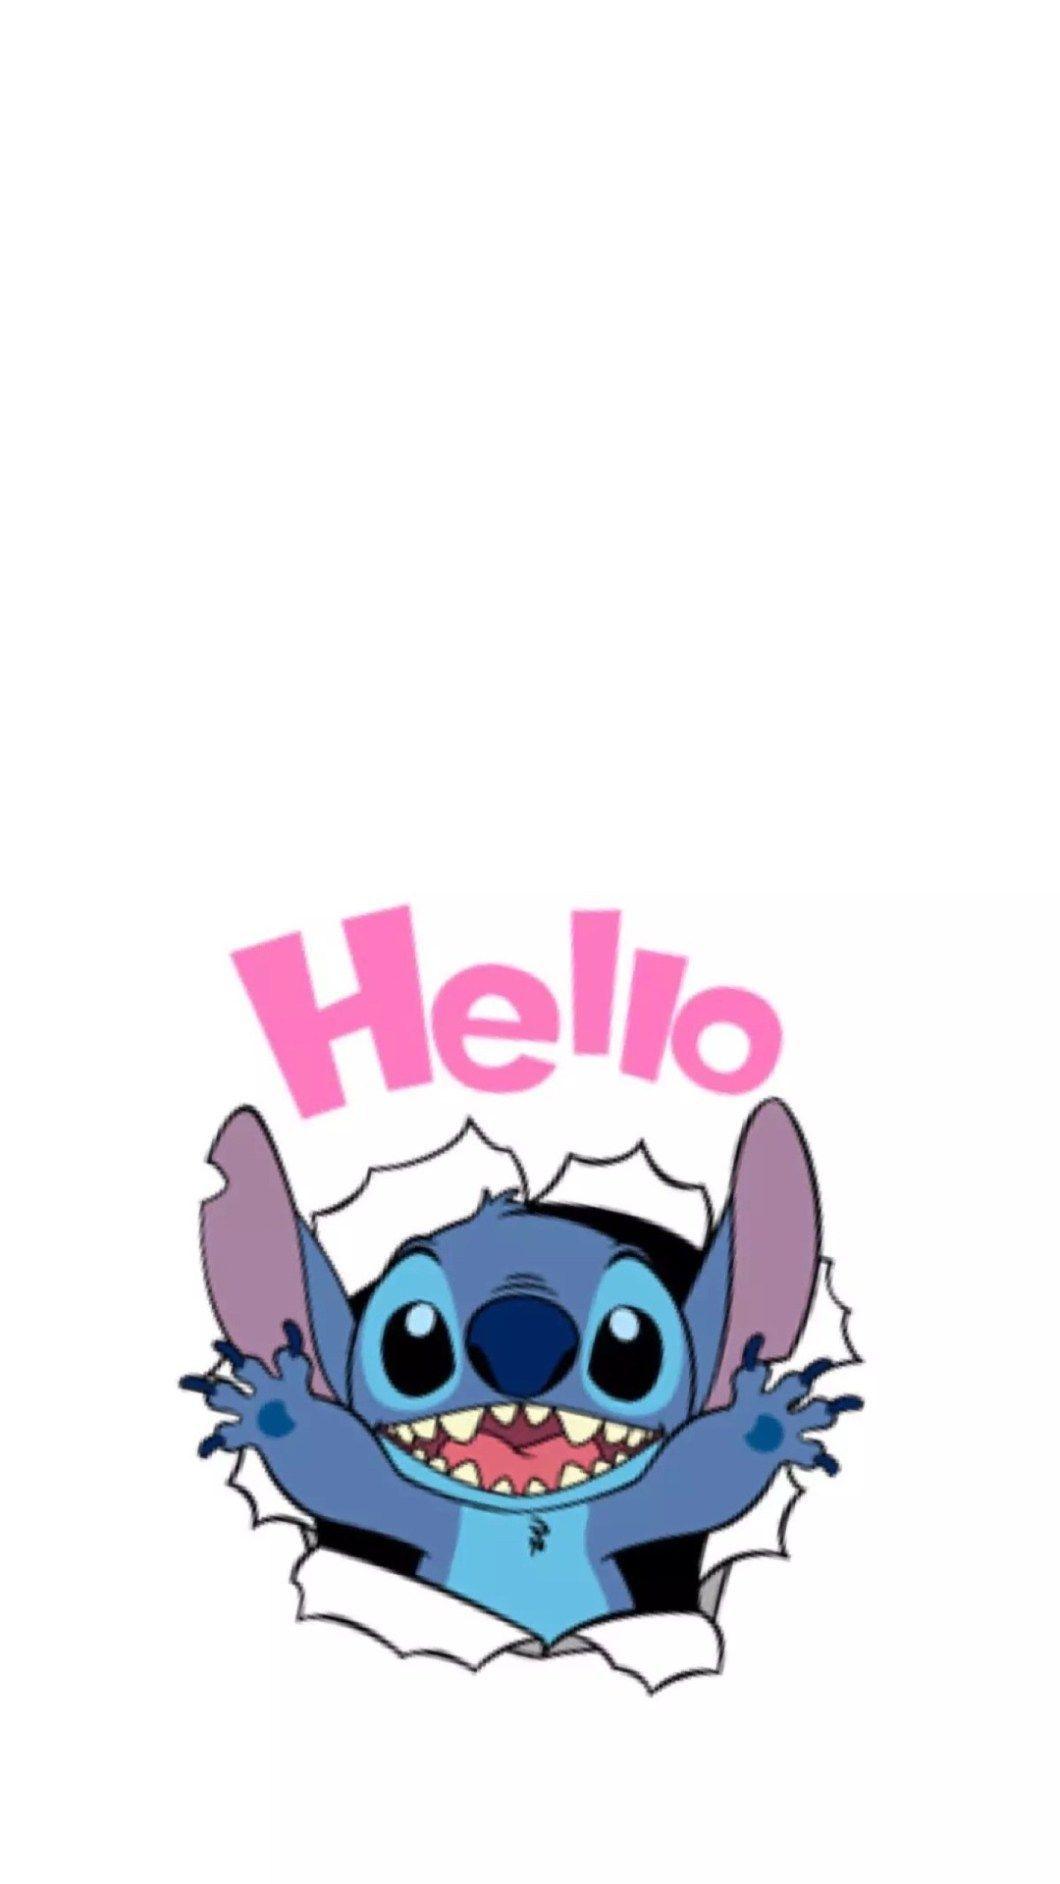 Cute Stitch Phone Wallpapers - Top Free Cute Stitch Phone Backgrounds